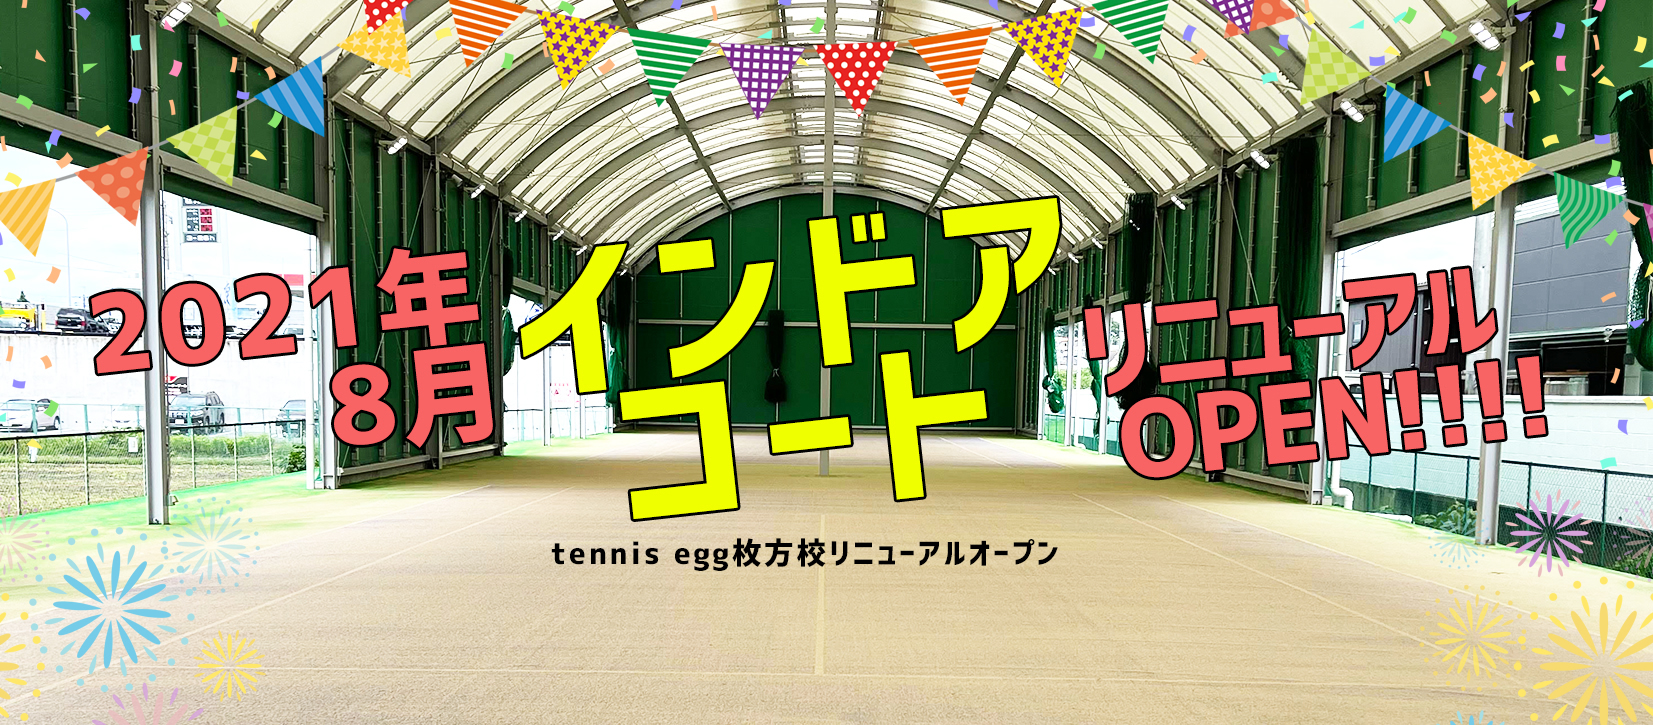 tennis egg枚方校。インドアコートリニューアルオープン！